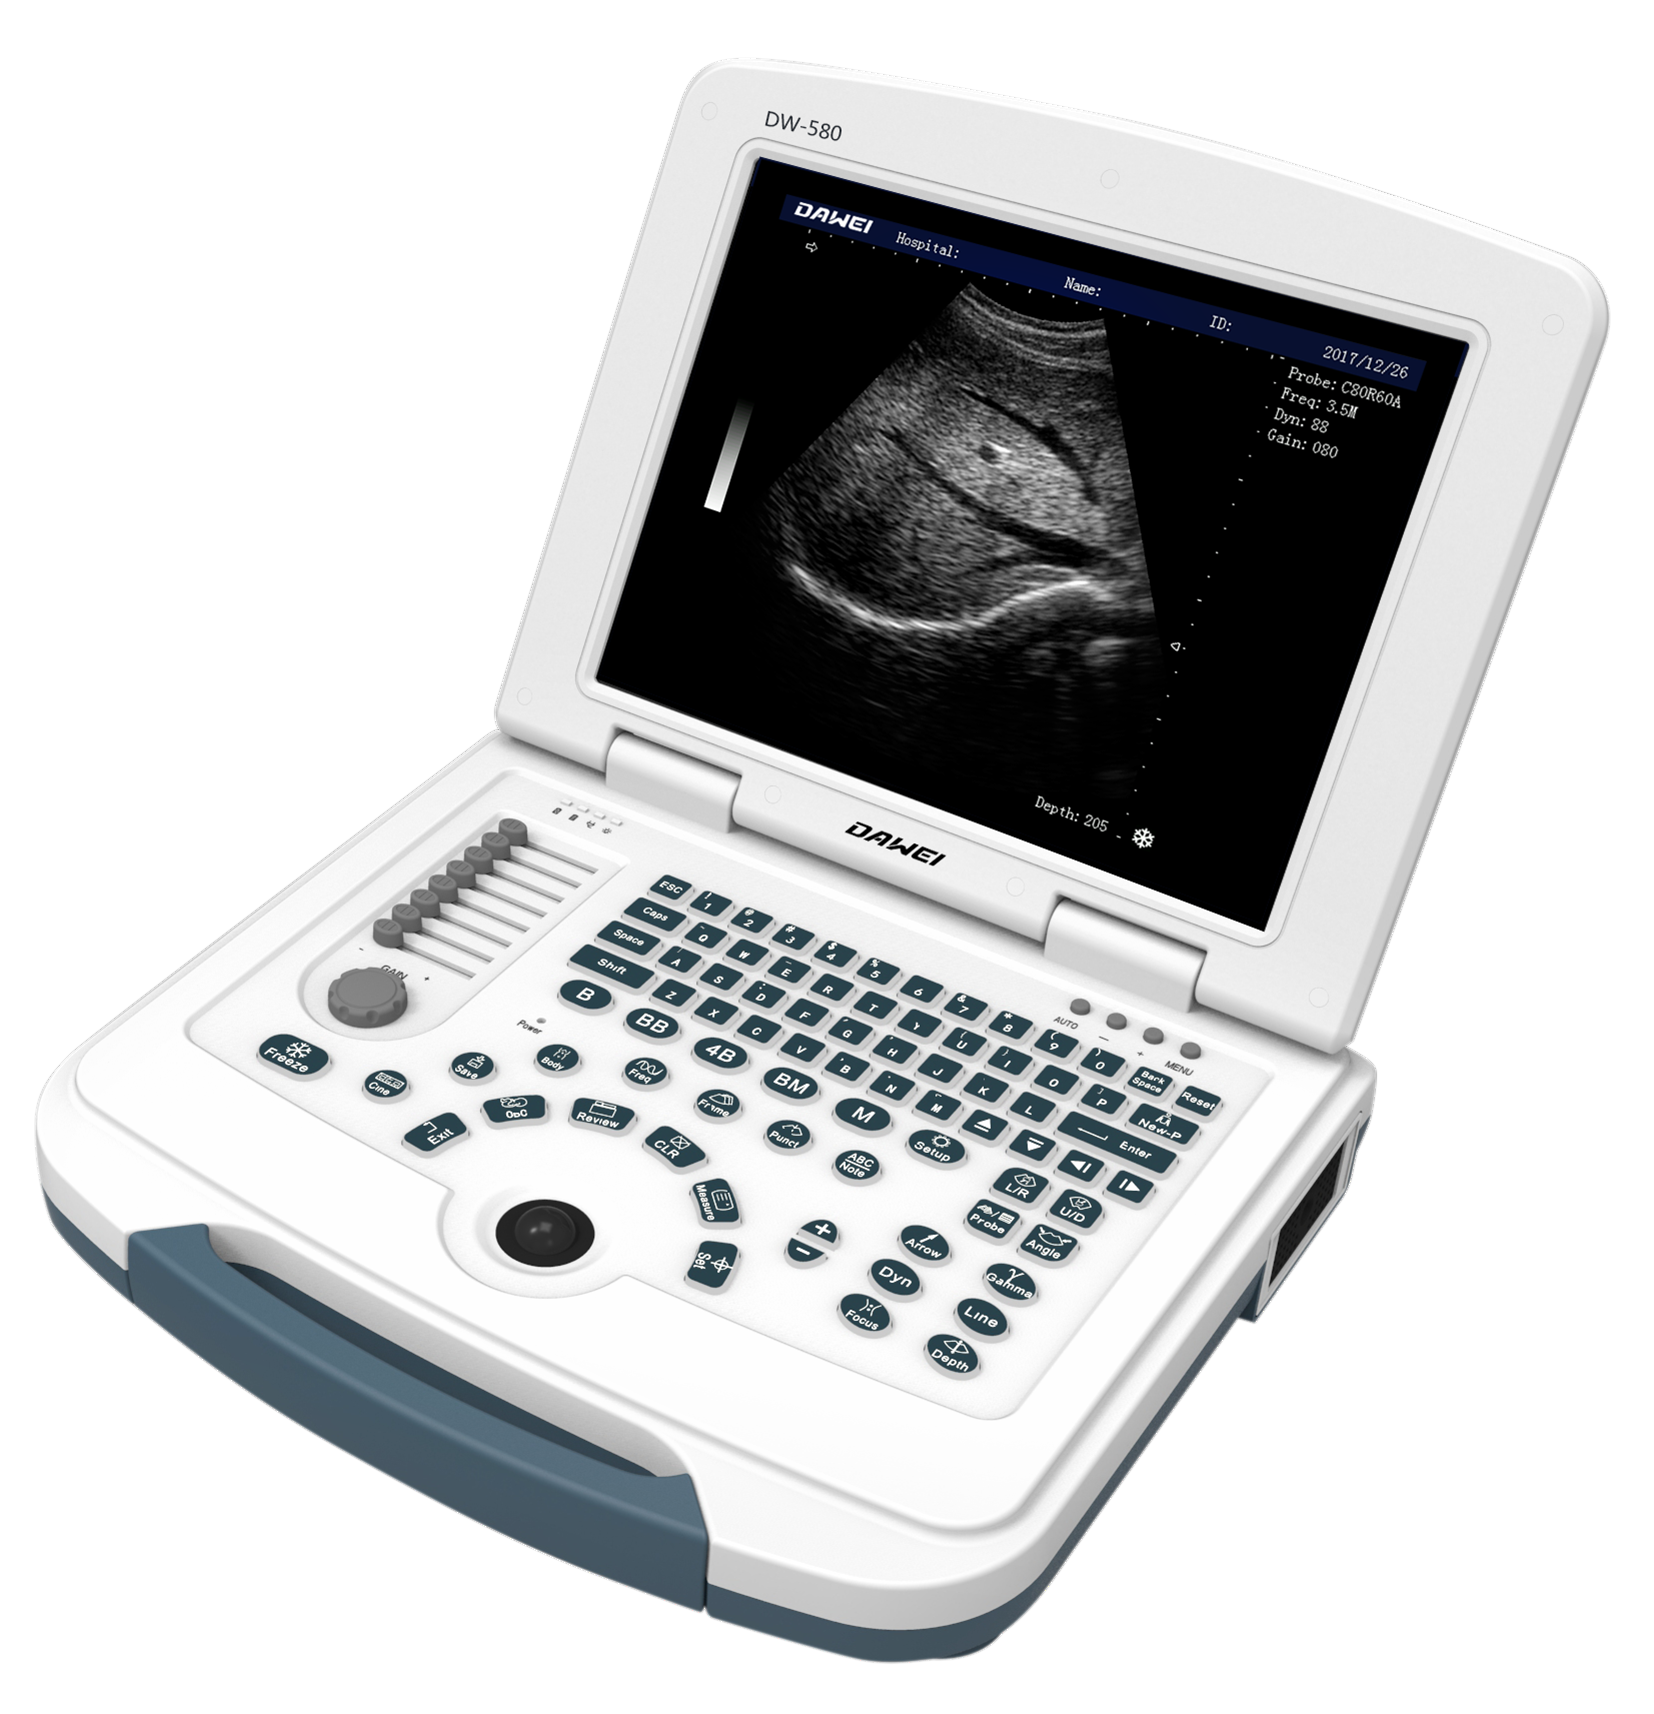 Portable Ultrasound Machine Dw580